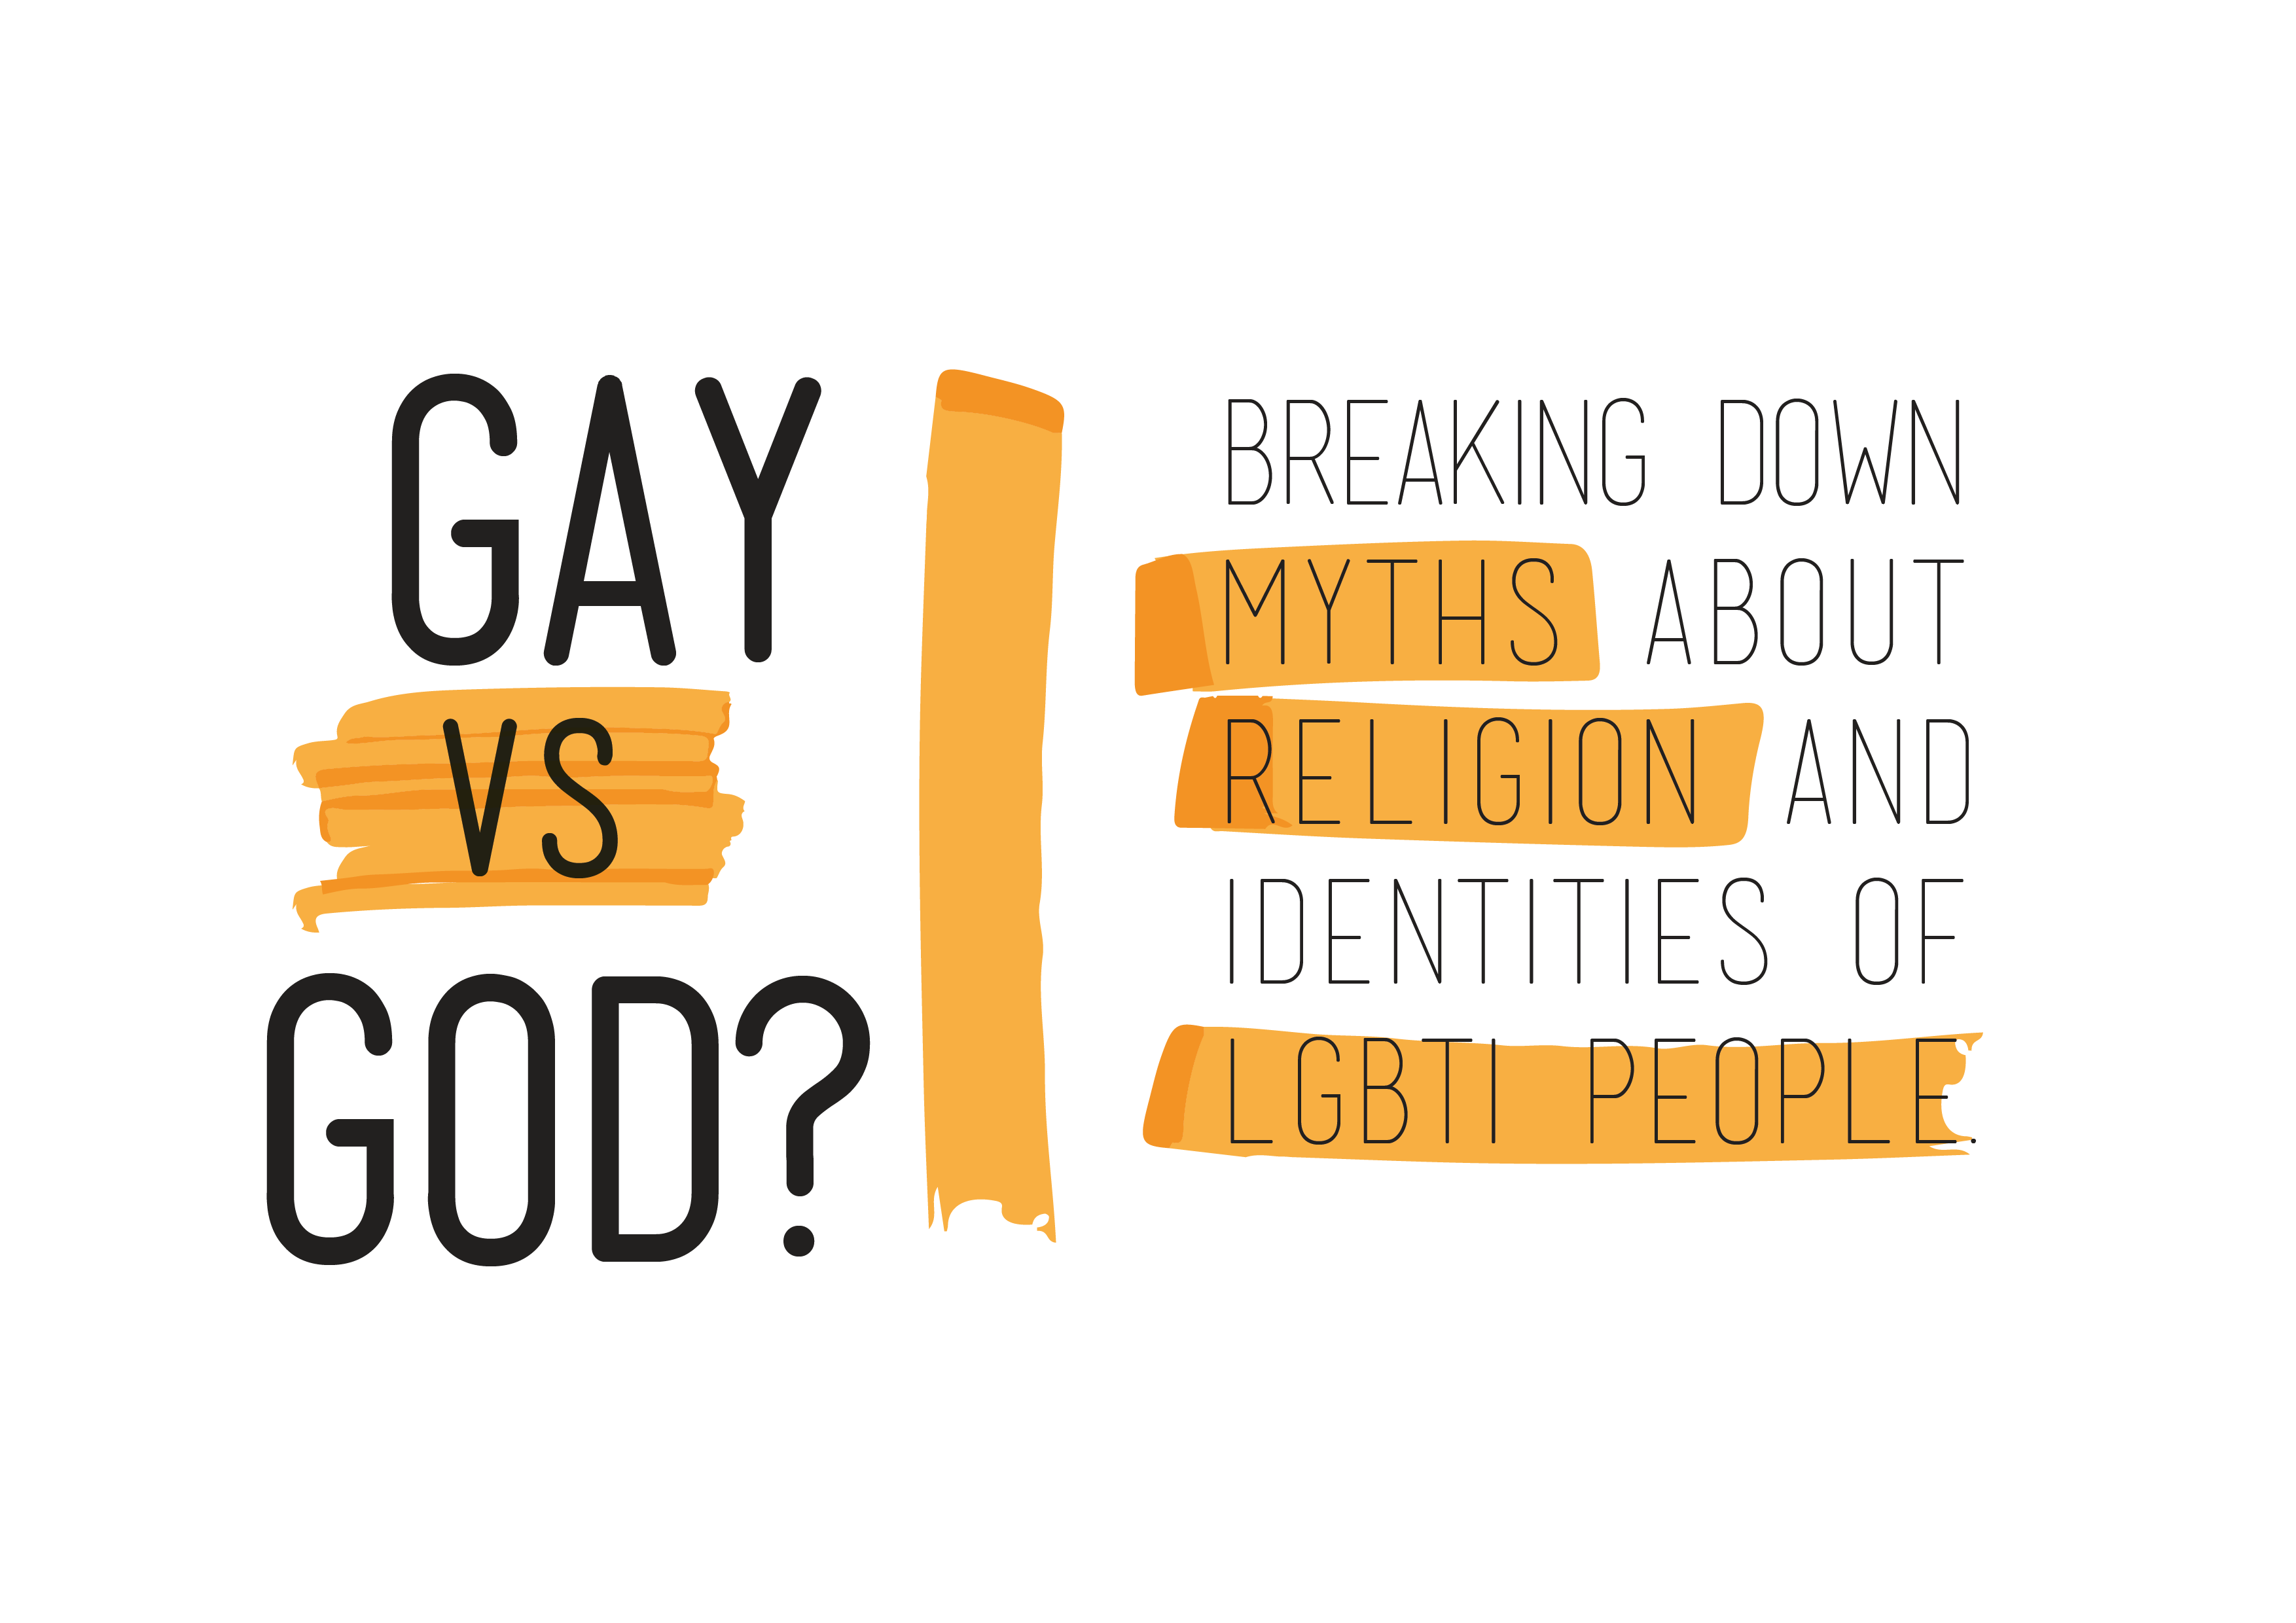 Gay Vs. God: una campagna Ilga-Europe